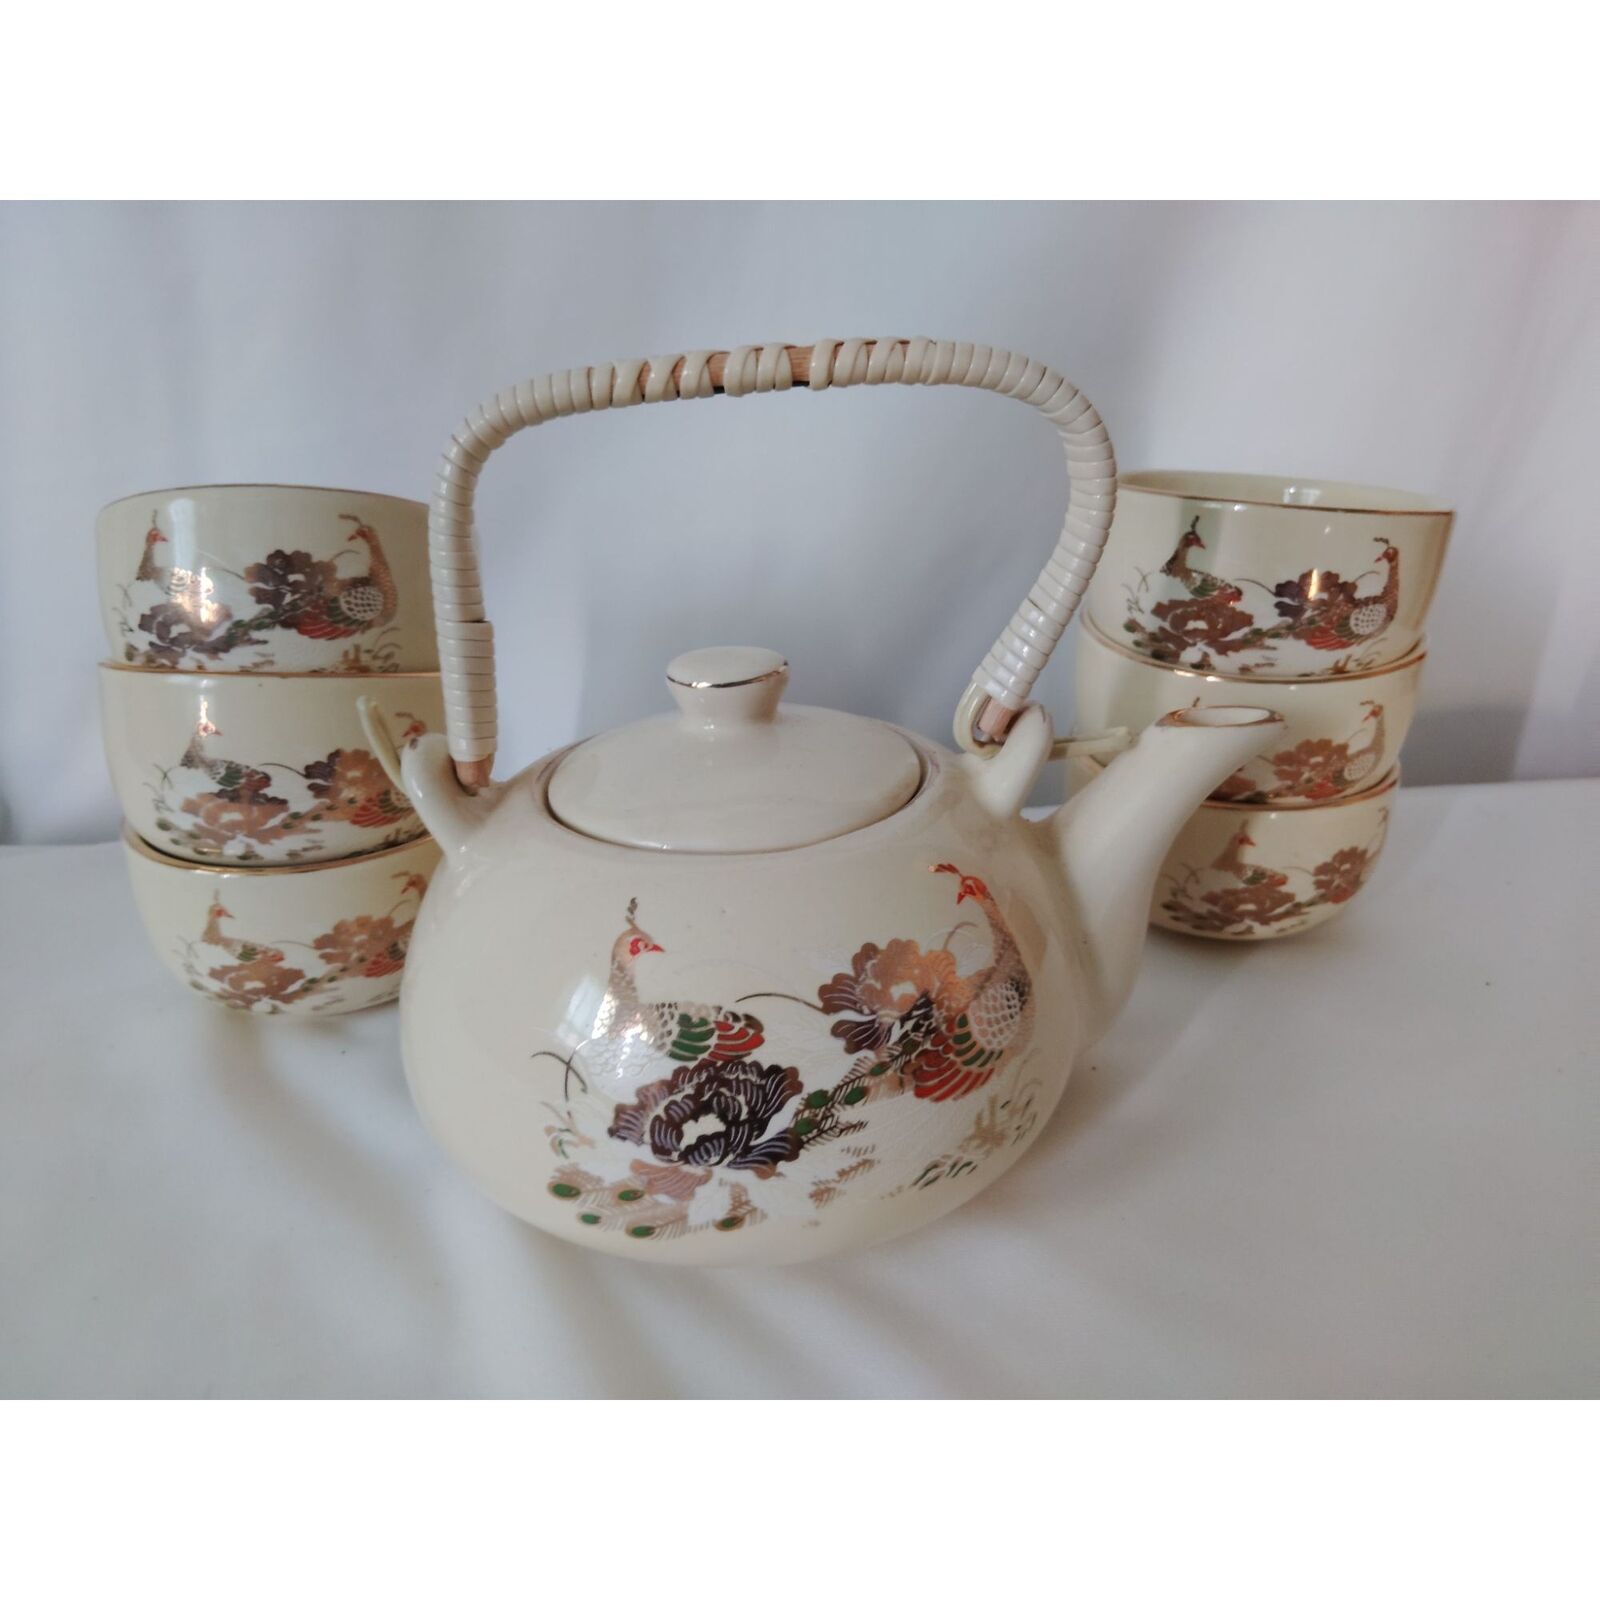 Vintage Japanese Tea Set With Peacocks Design - Teapot & 6 Cups